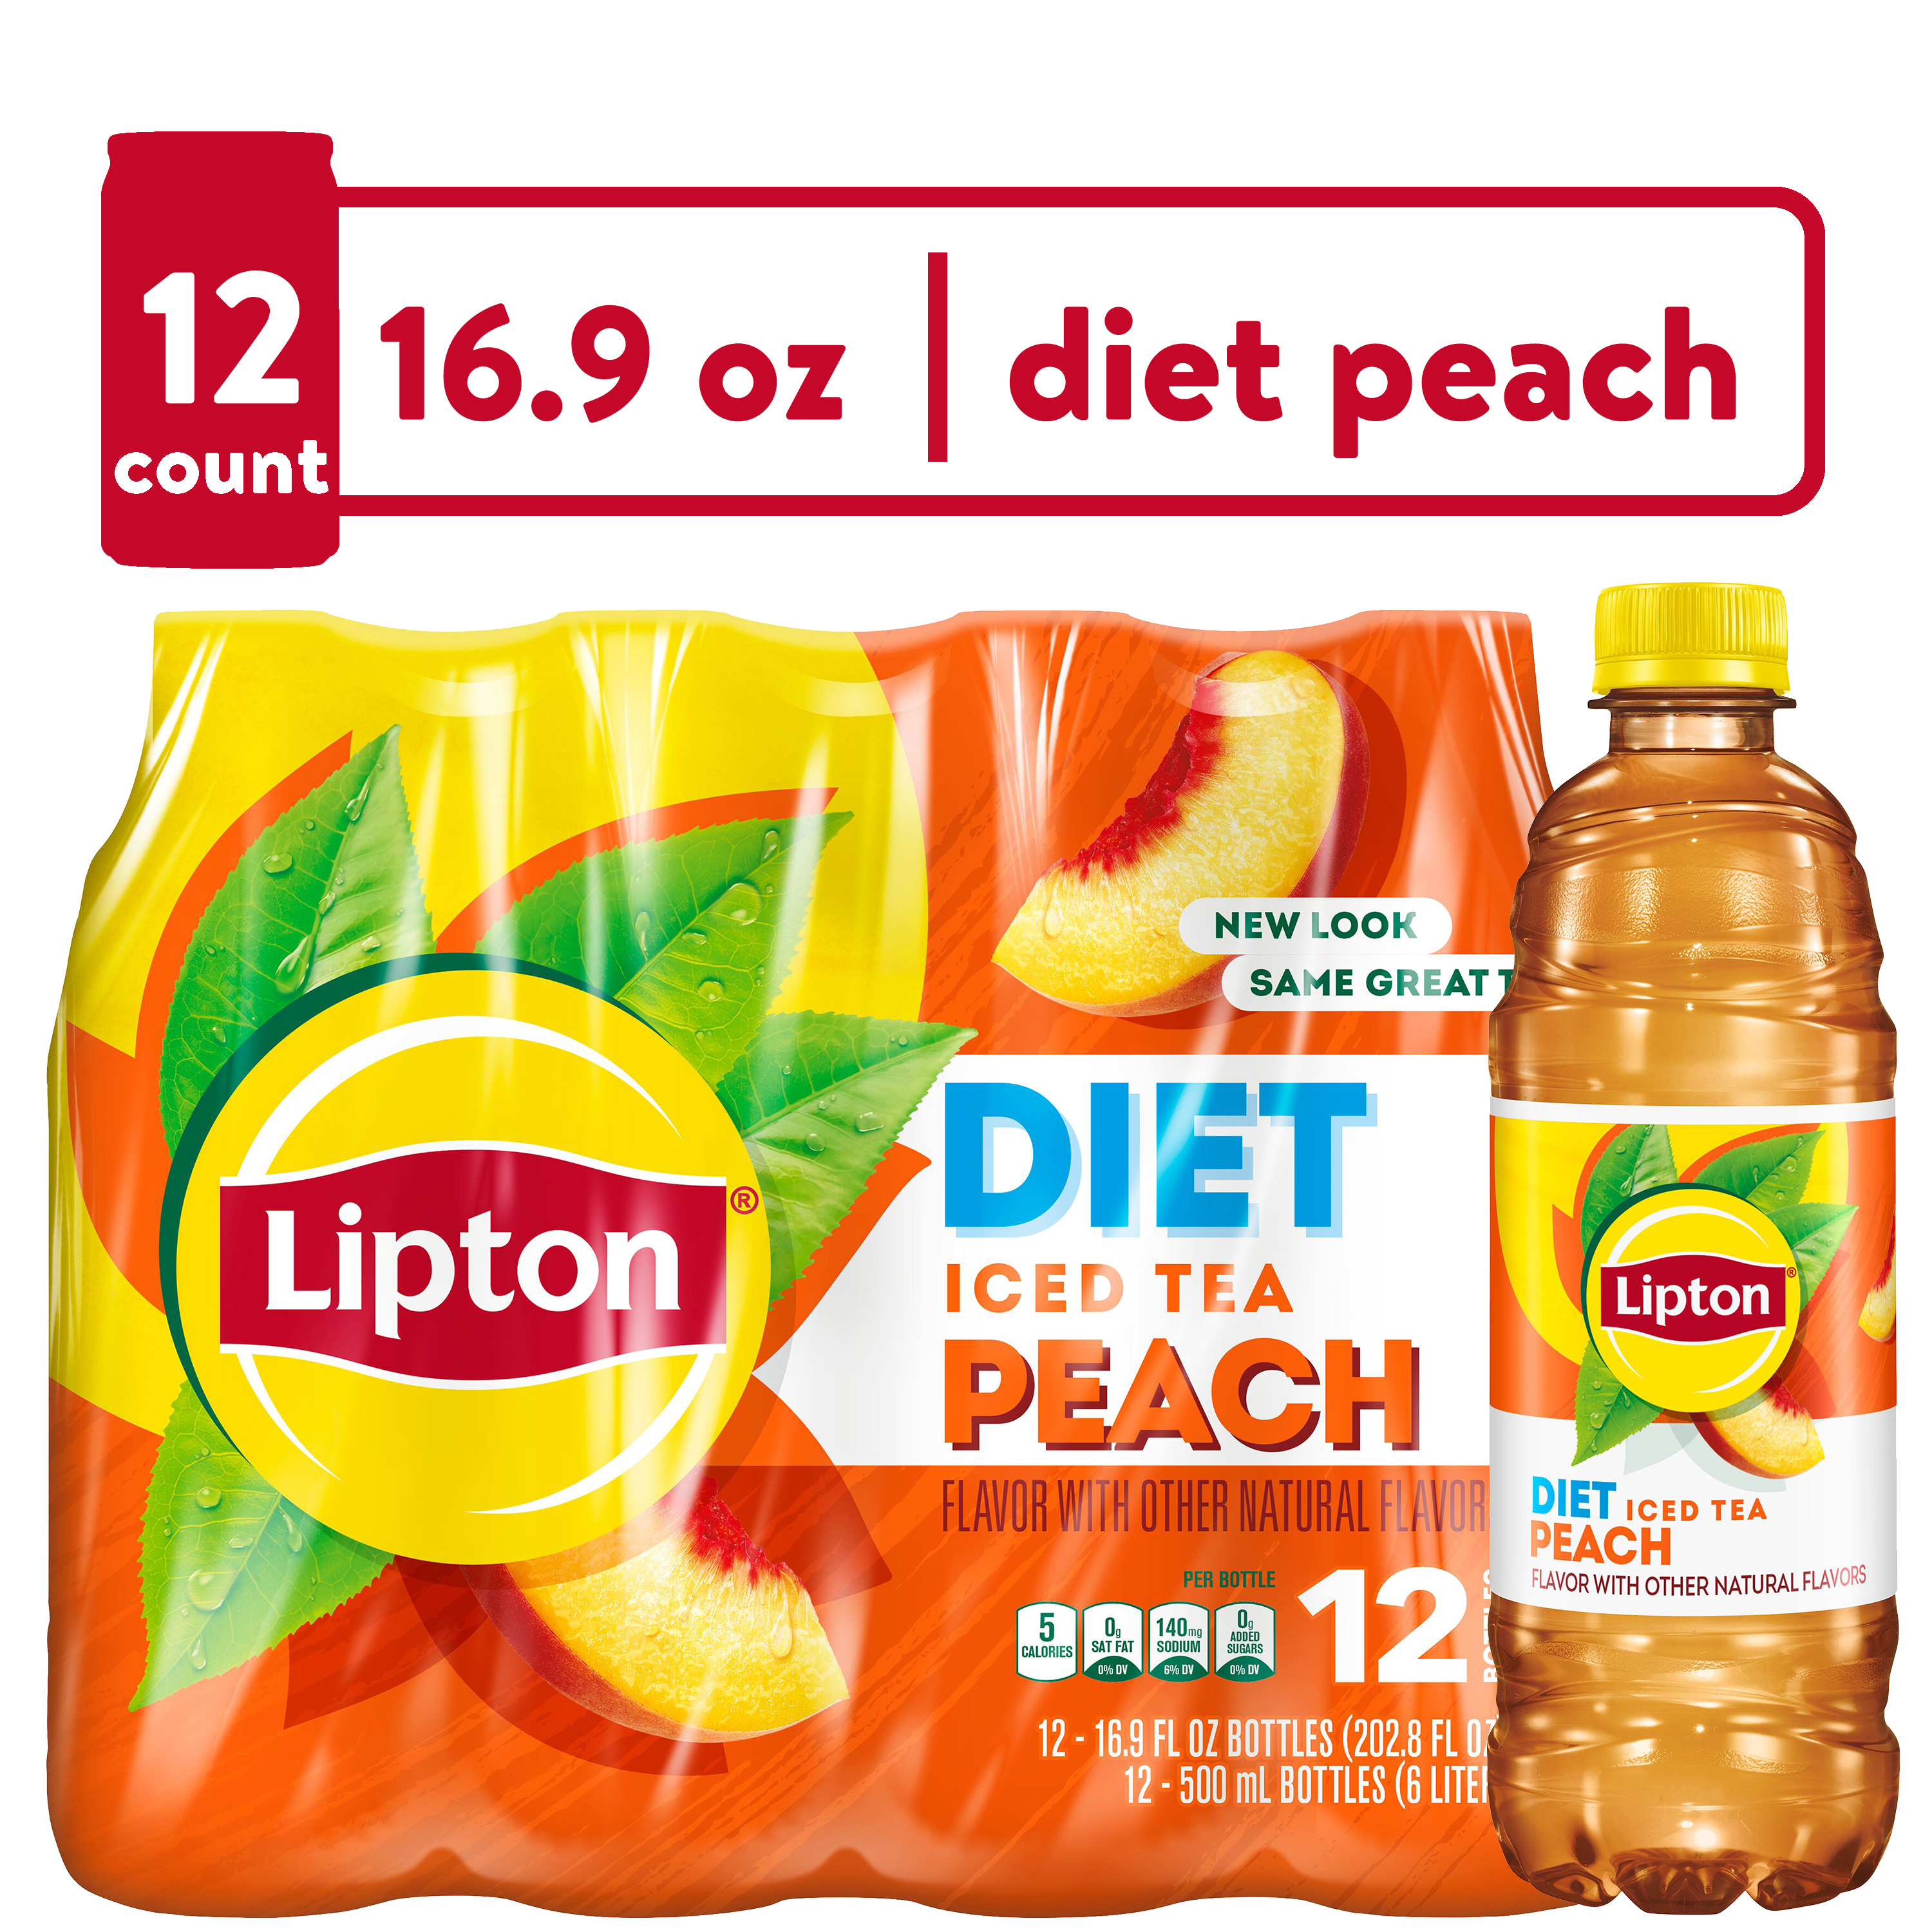 Lipton Diet Peach Iced Tea, 16.9 fl oz, 12 Pack Bottles - image 1 of 6